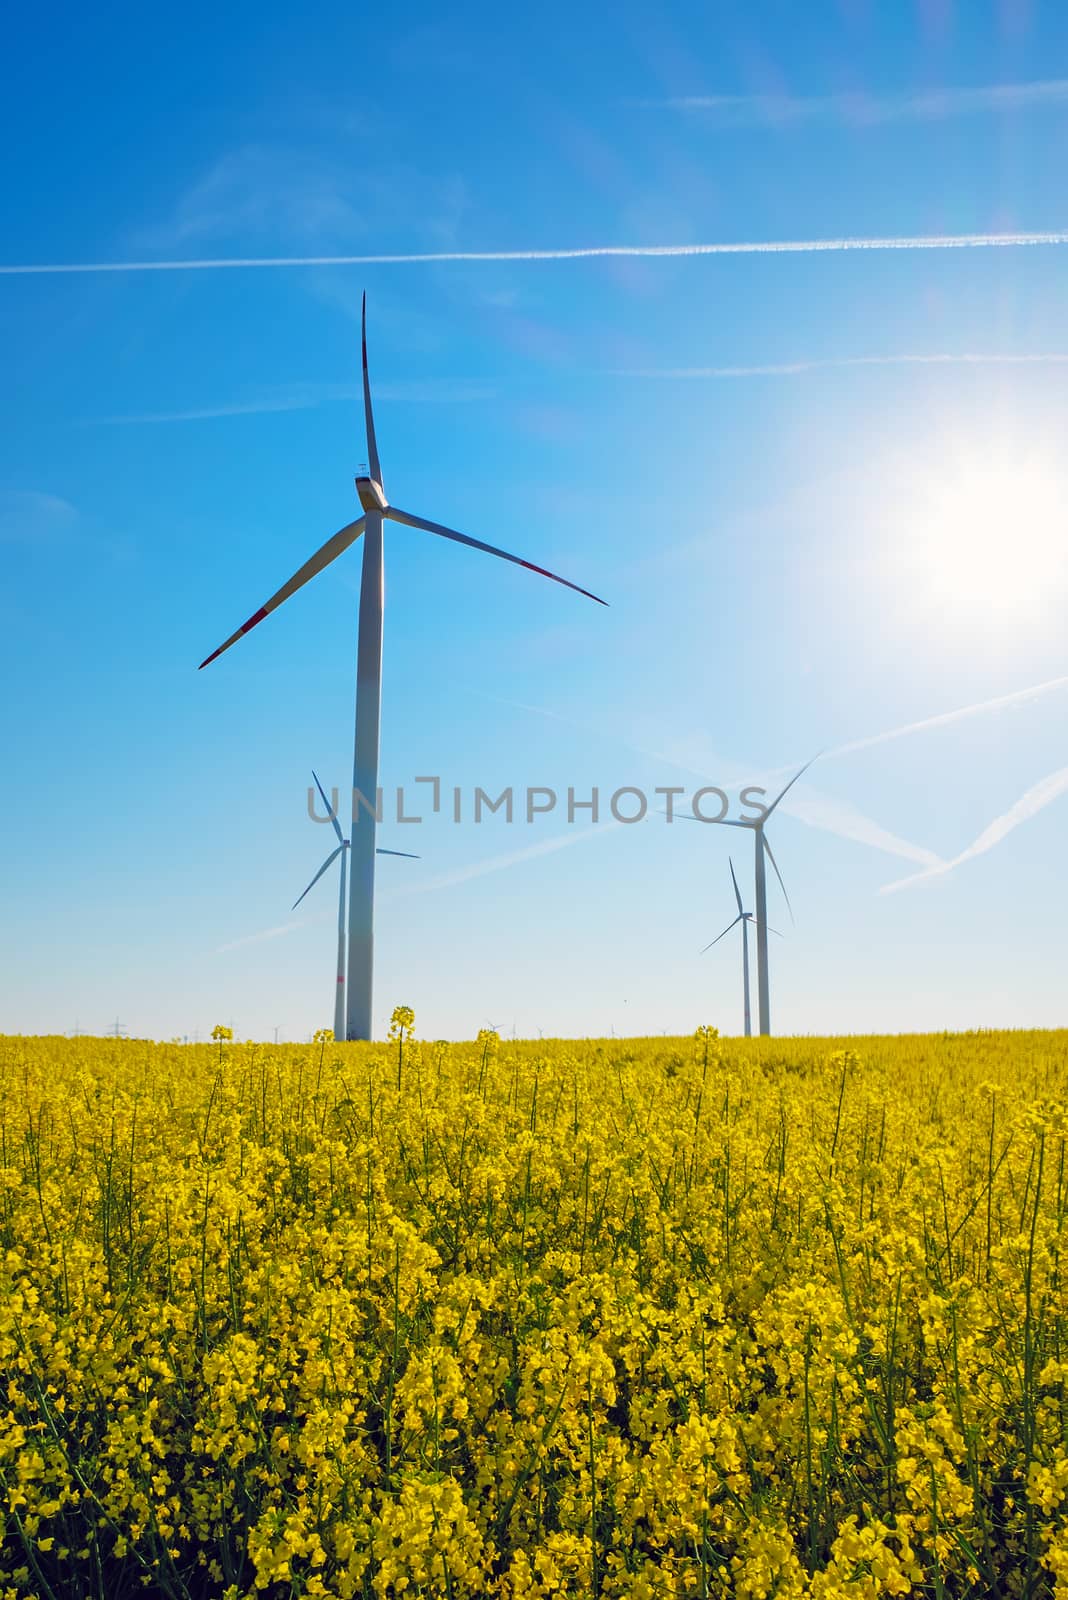 Sunshine, rapeseed and windwheels seen in rural Germany